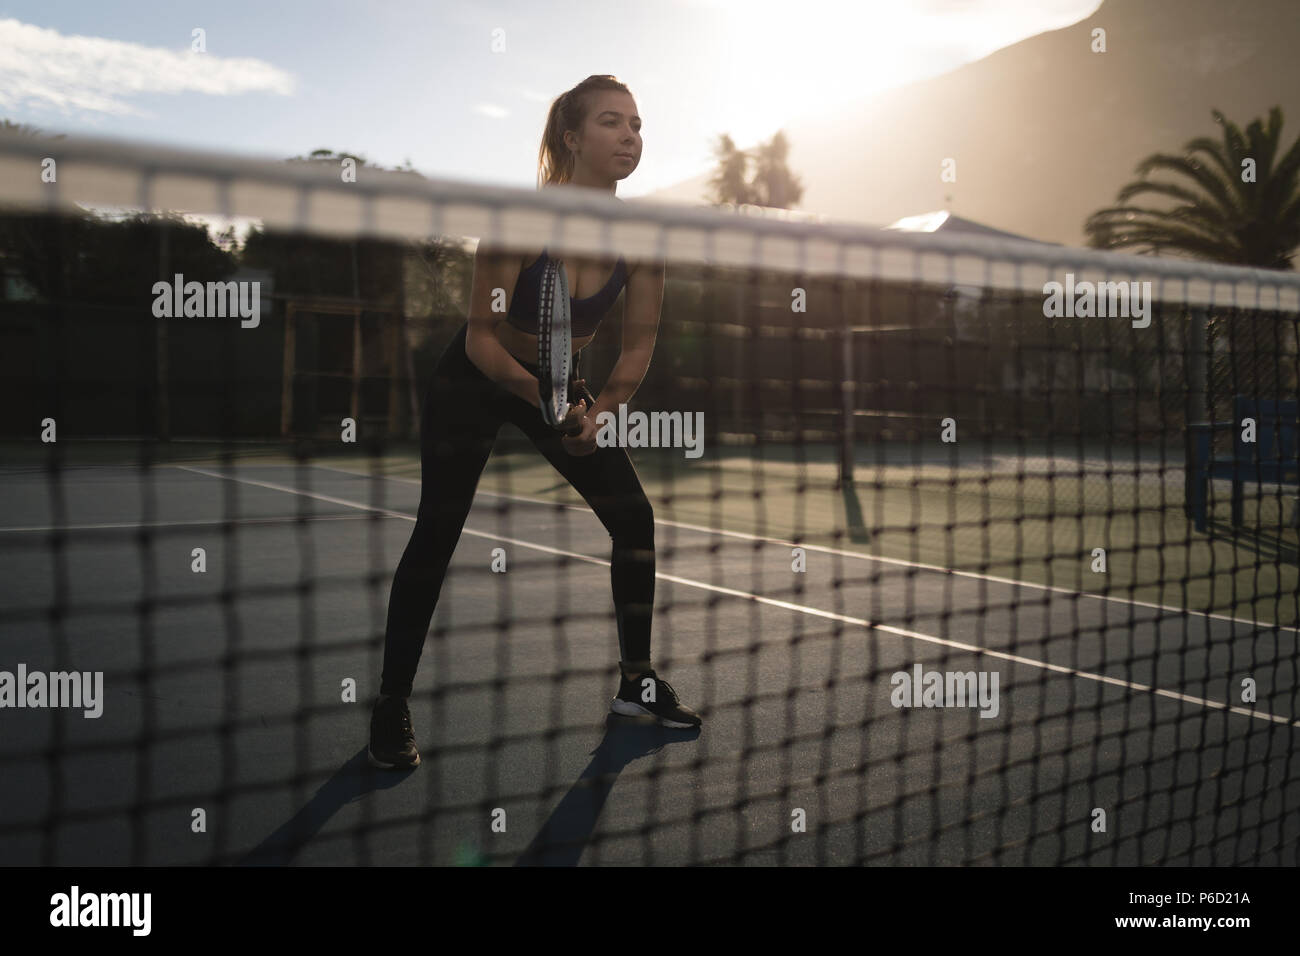 Frau üben Tennis Tennisplatz Stockfoto